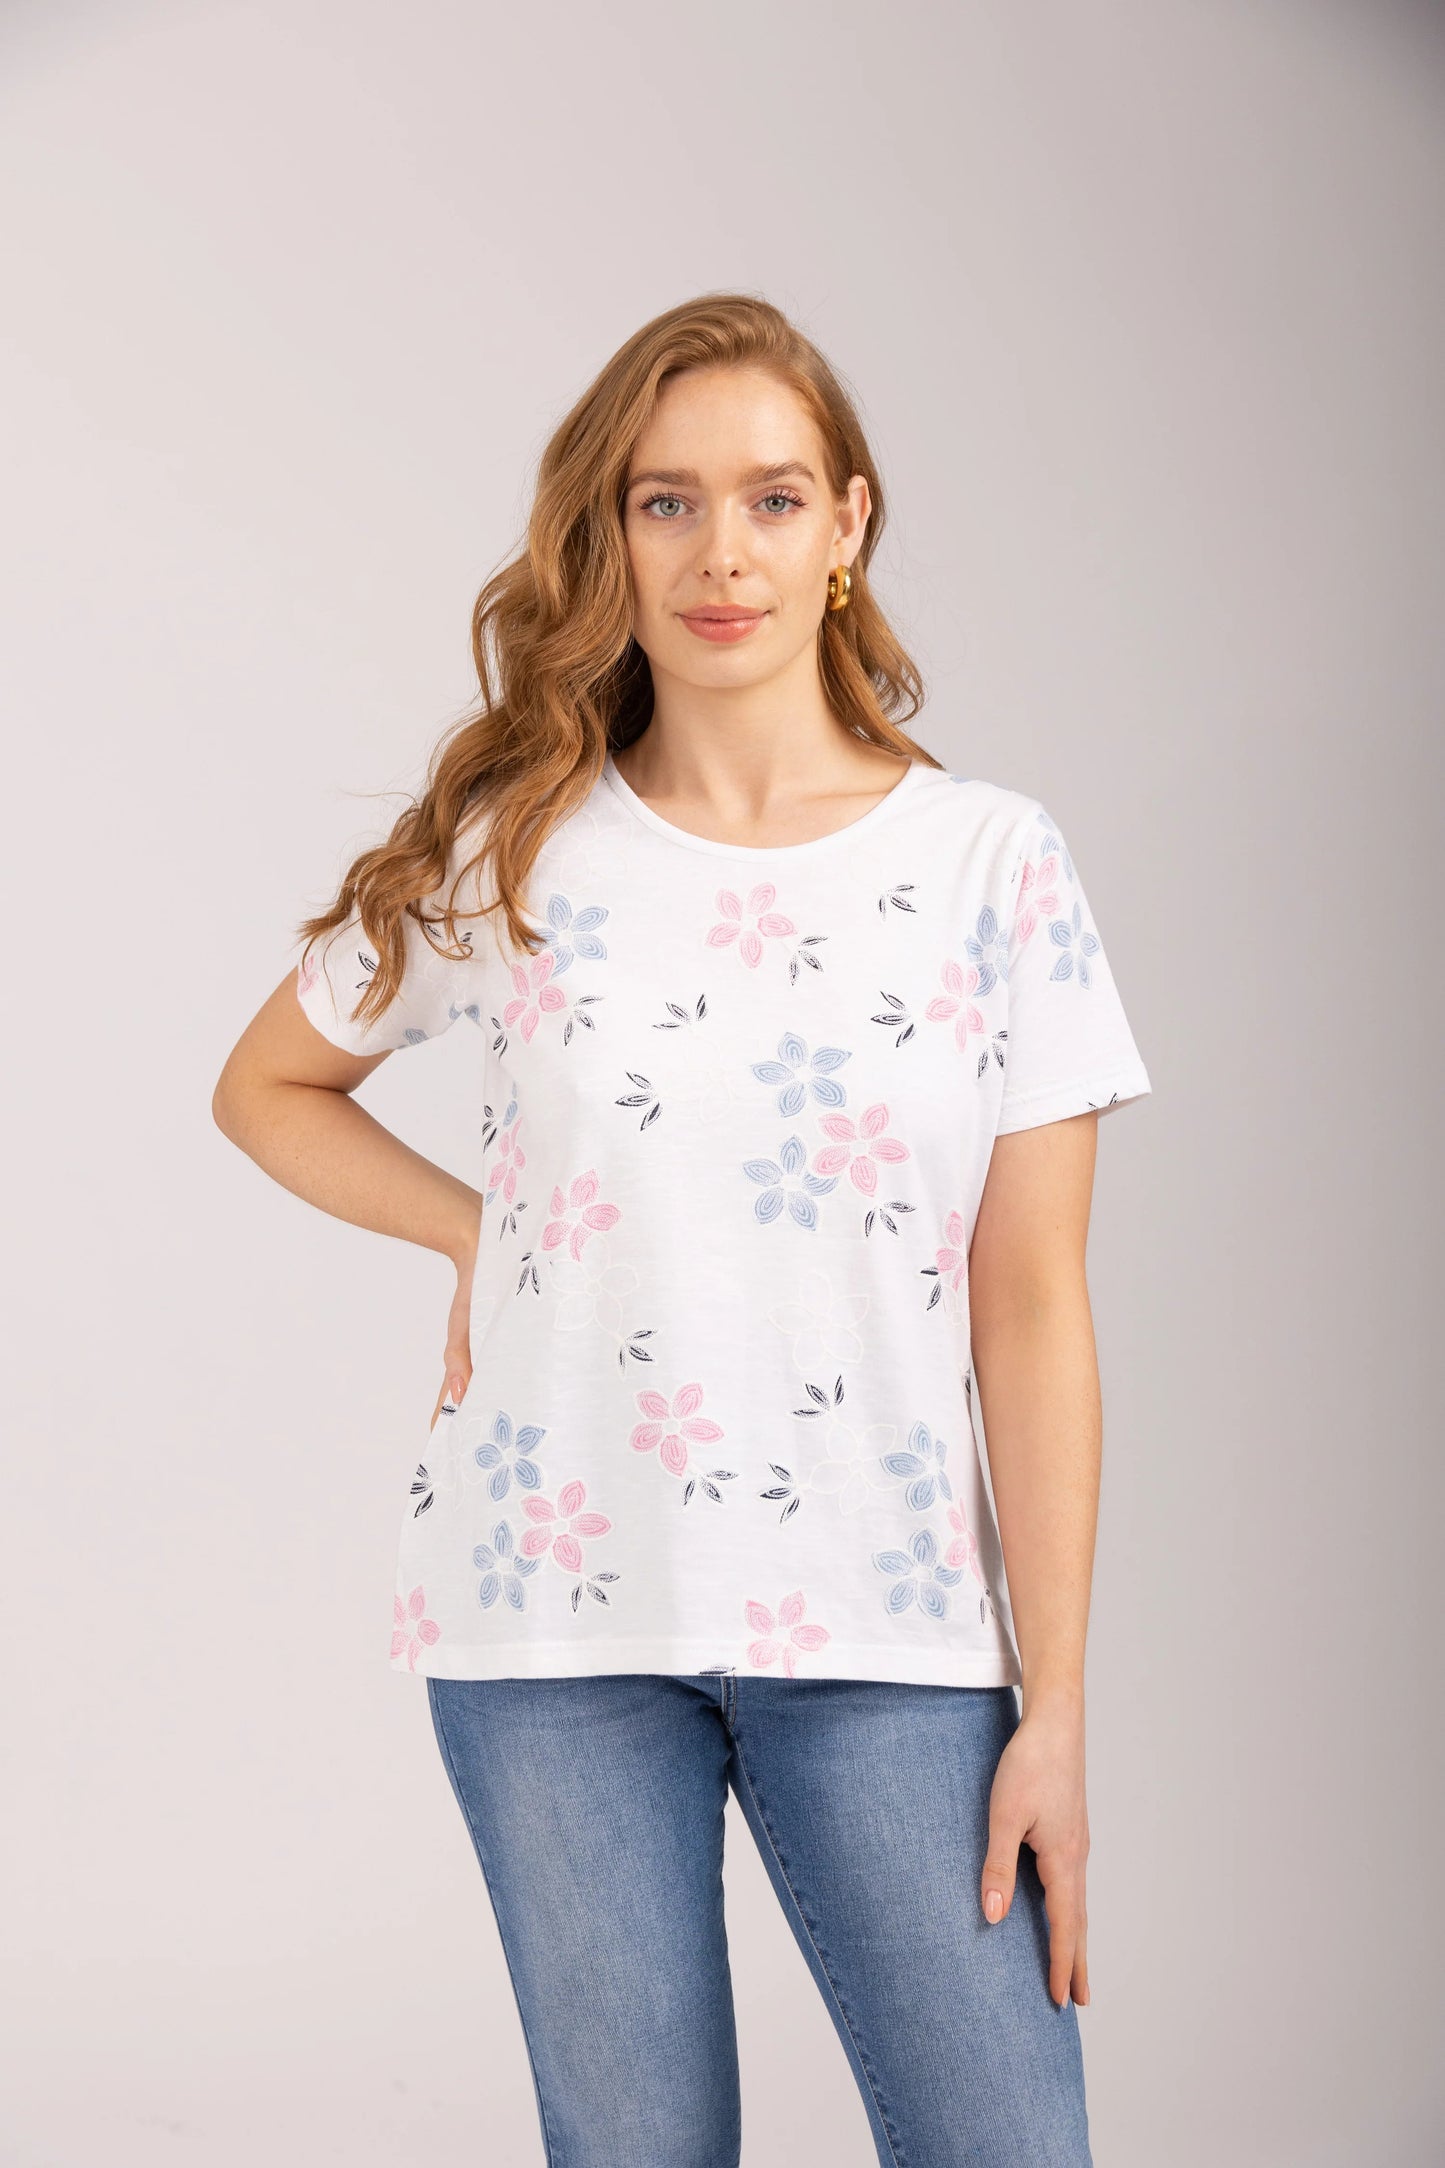 Mudflower - Printed Flower Detail T-Shirt - 749